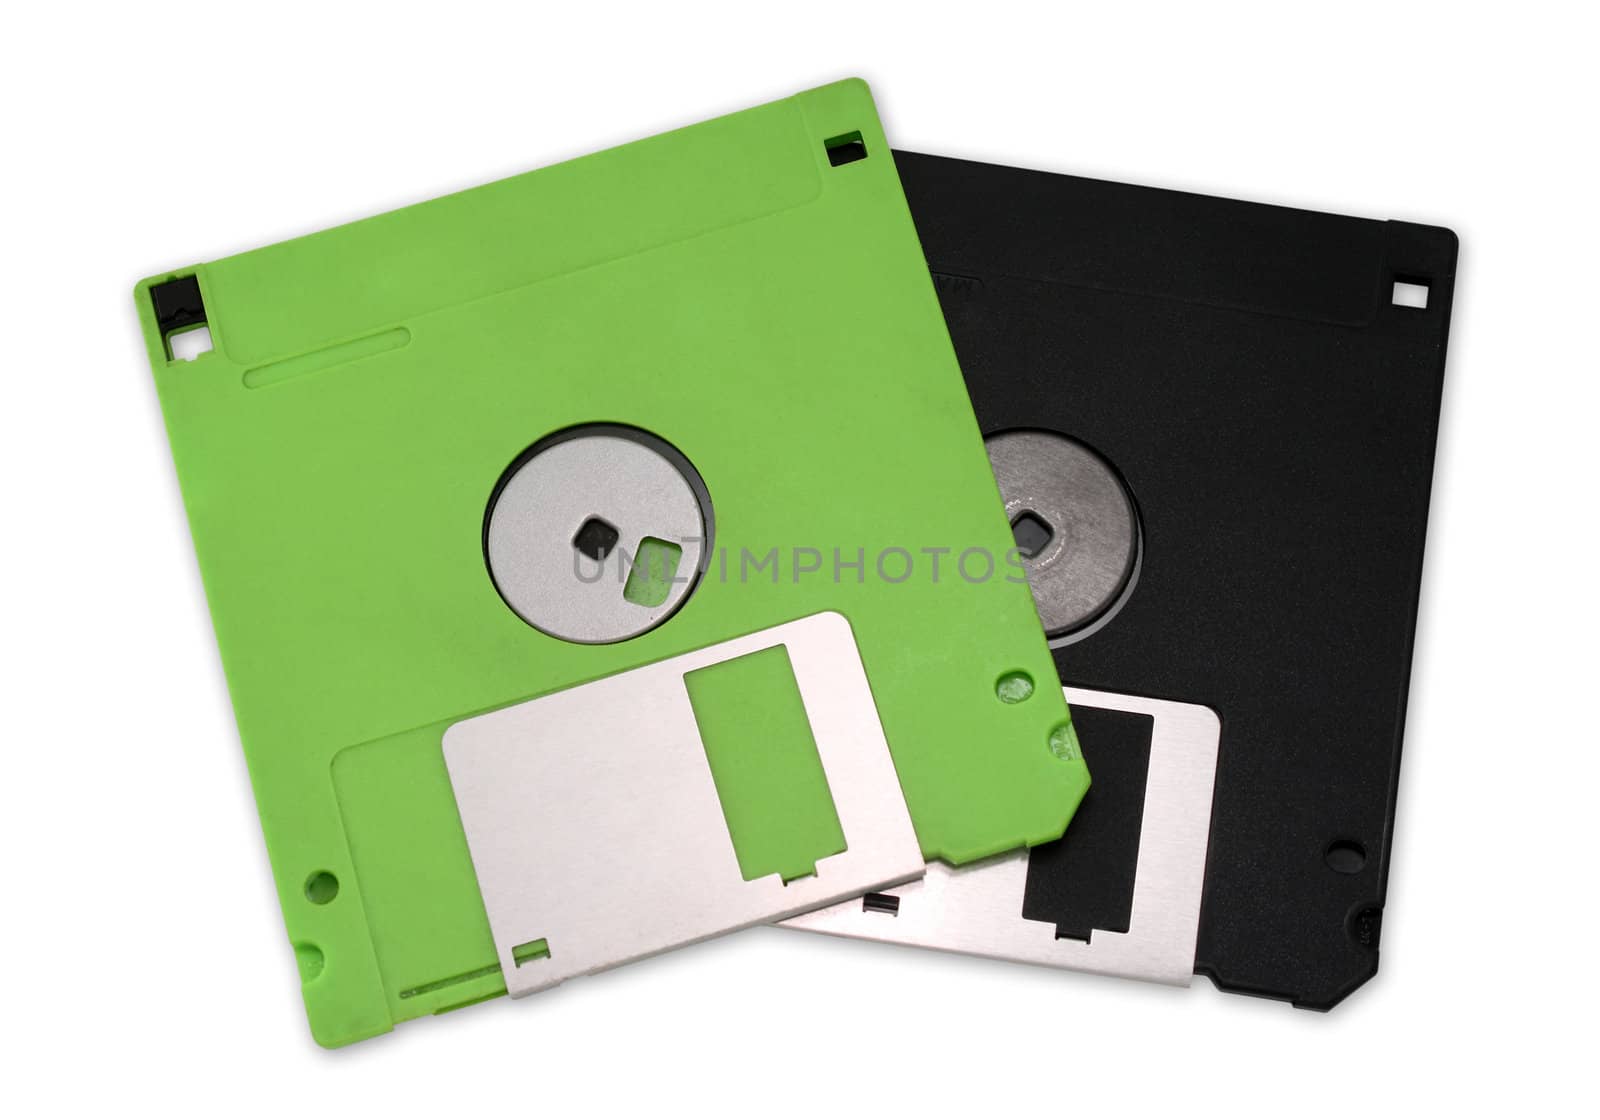 Floppy disks by liewluck